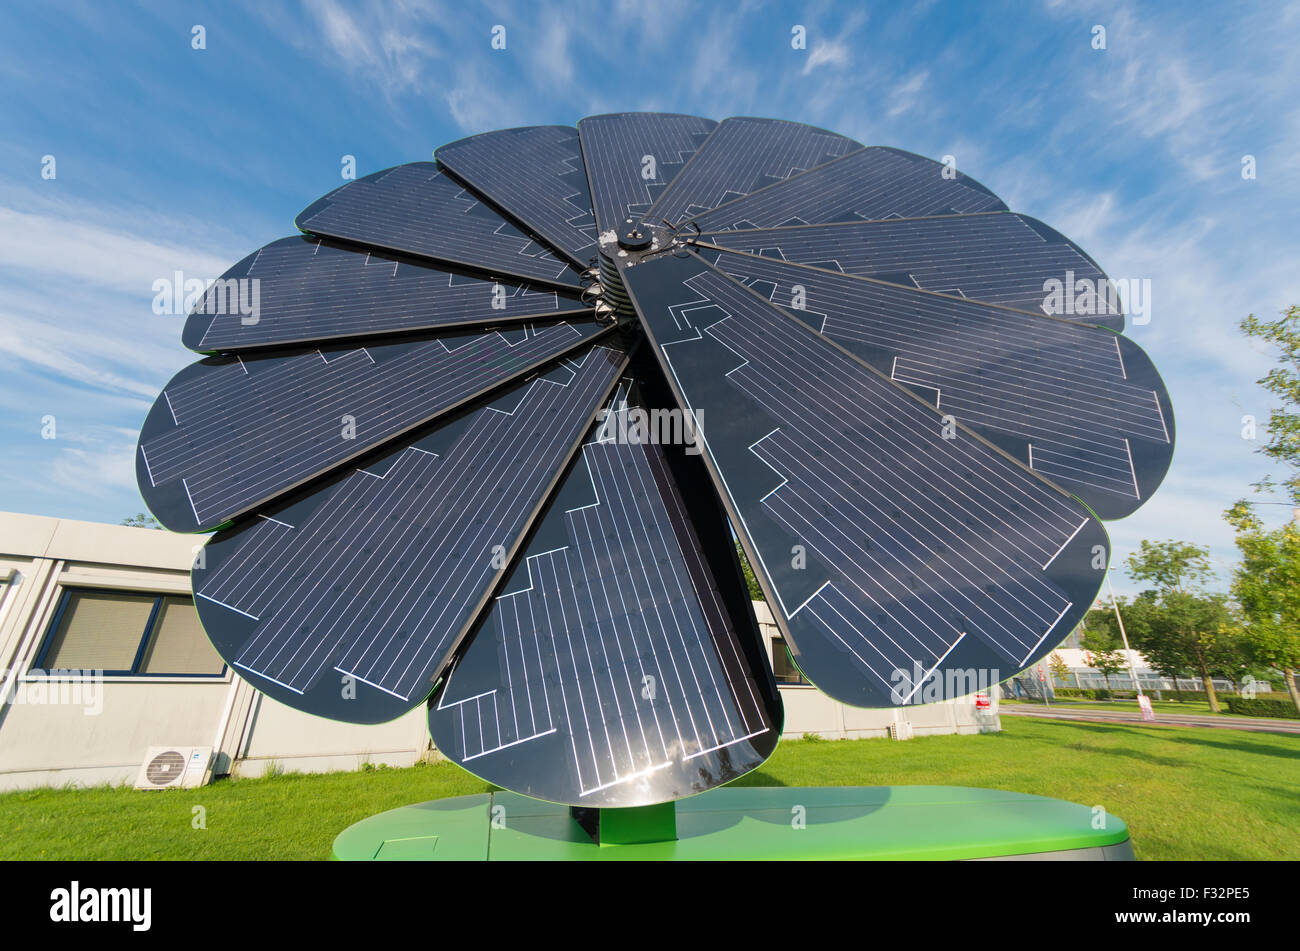 GRONINGEN, NETHERLANDS - AUGUST 22, 2015: Smart flower foldable solar collector on the groningen university area. The smart flow Stock Photo